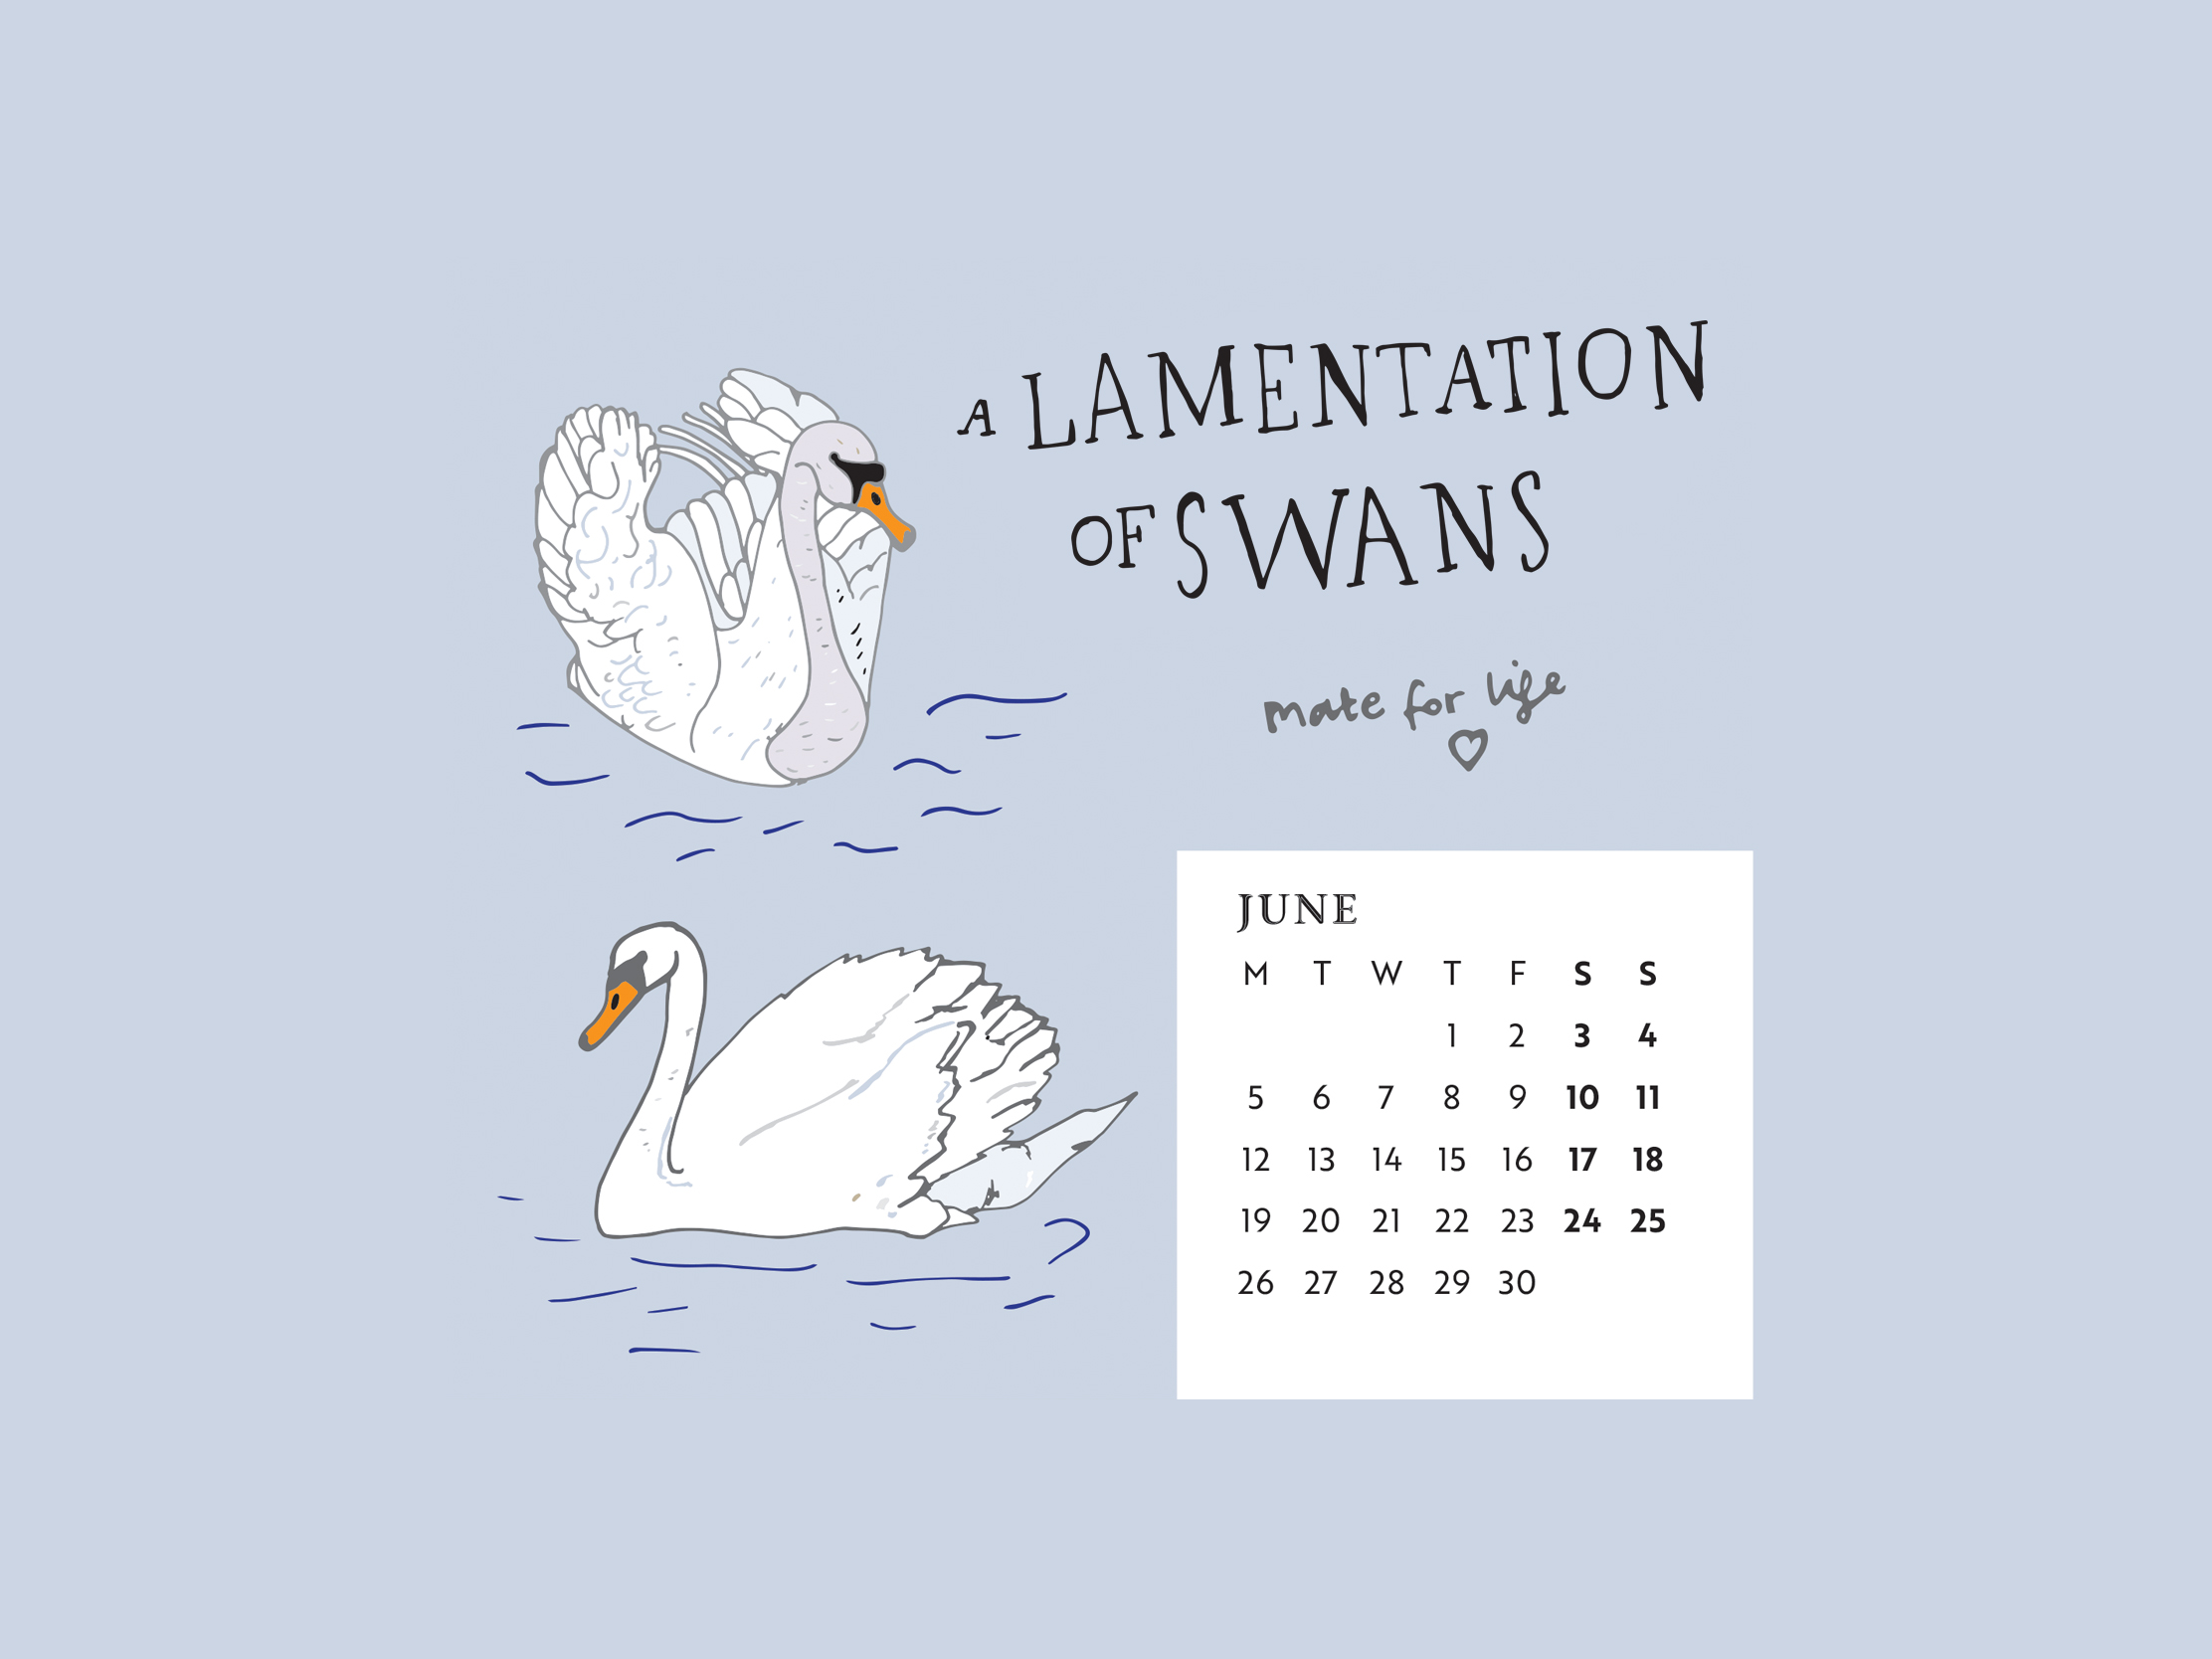 Download our calendar artwork featuring collective nouns for birds